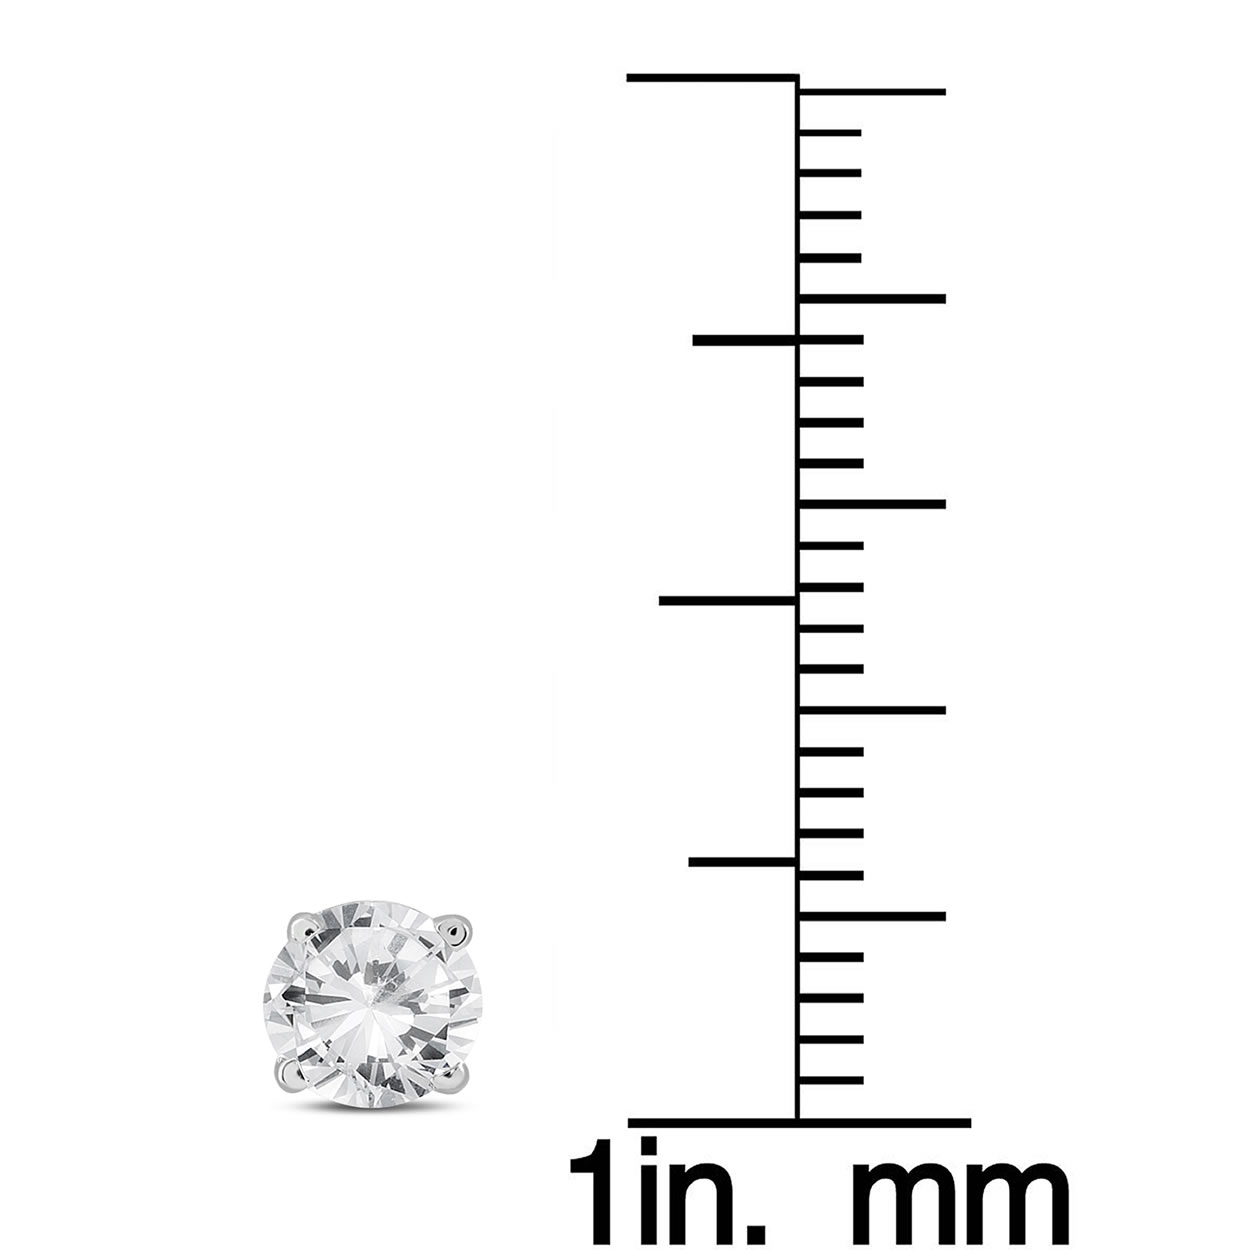 szul.com 5/8 Carat TW Diamond Pendant and Earring Set in 14K White Gold